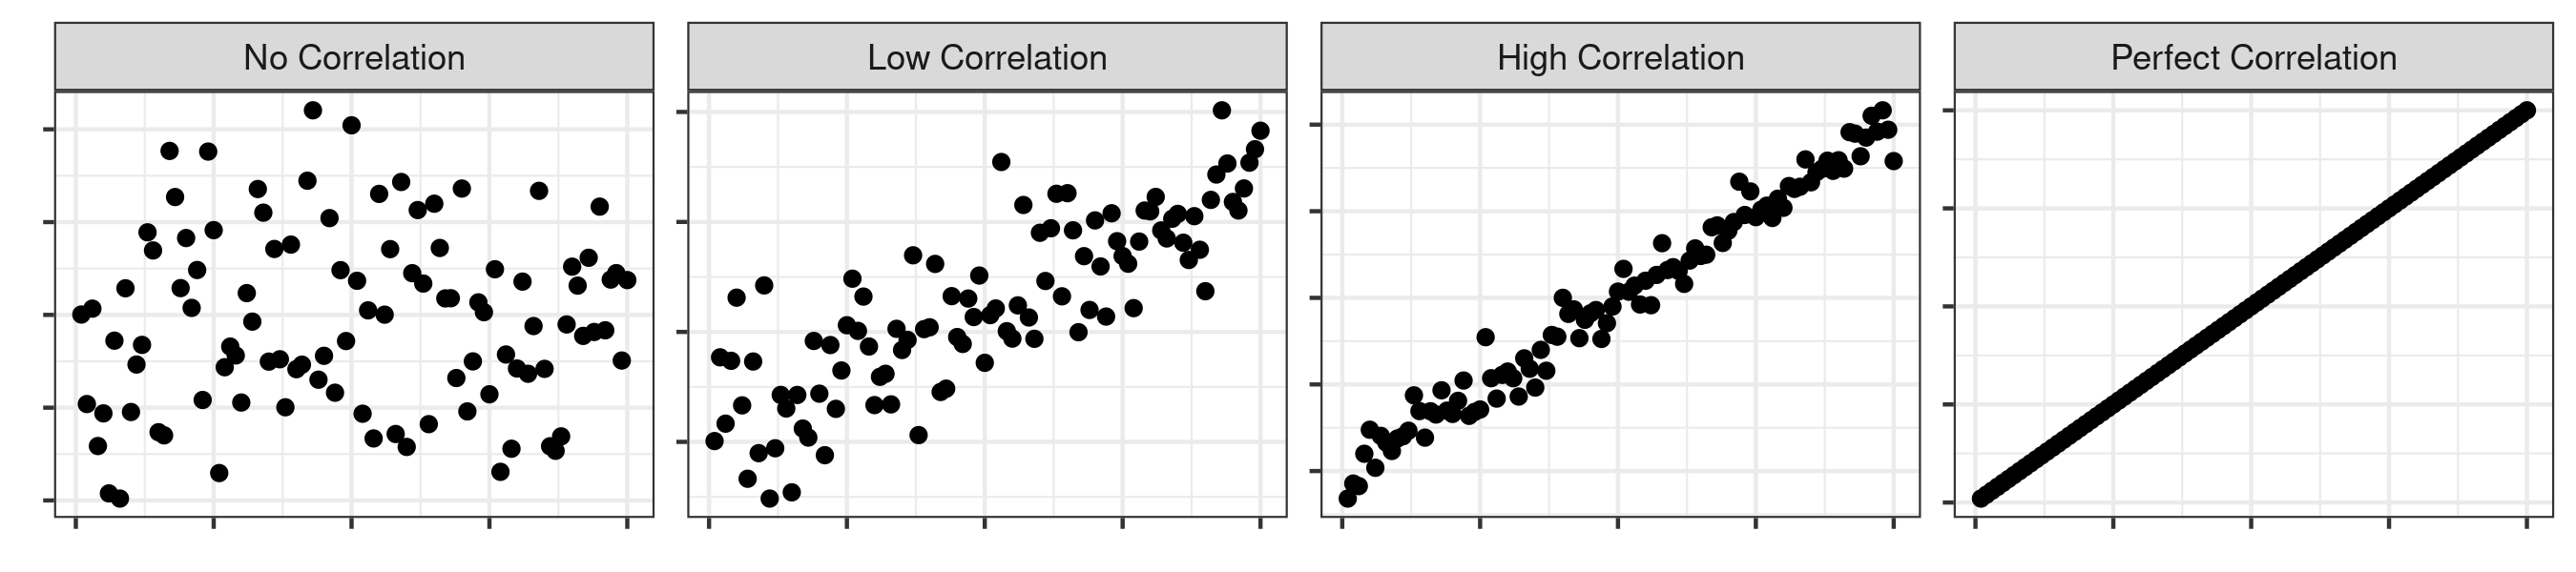 Graphs showing no correlation